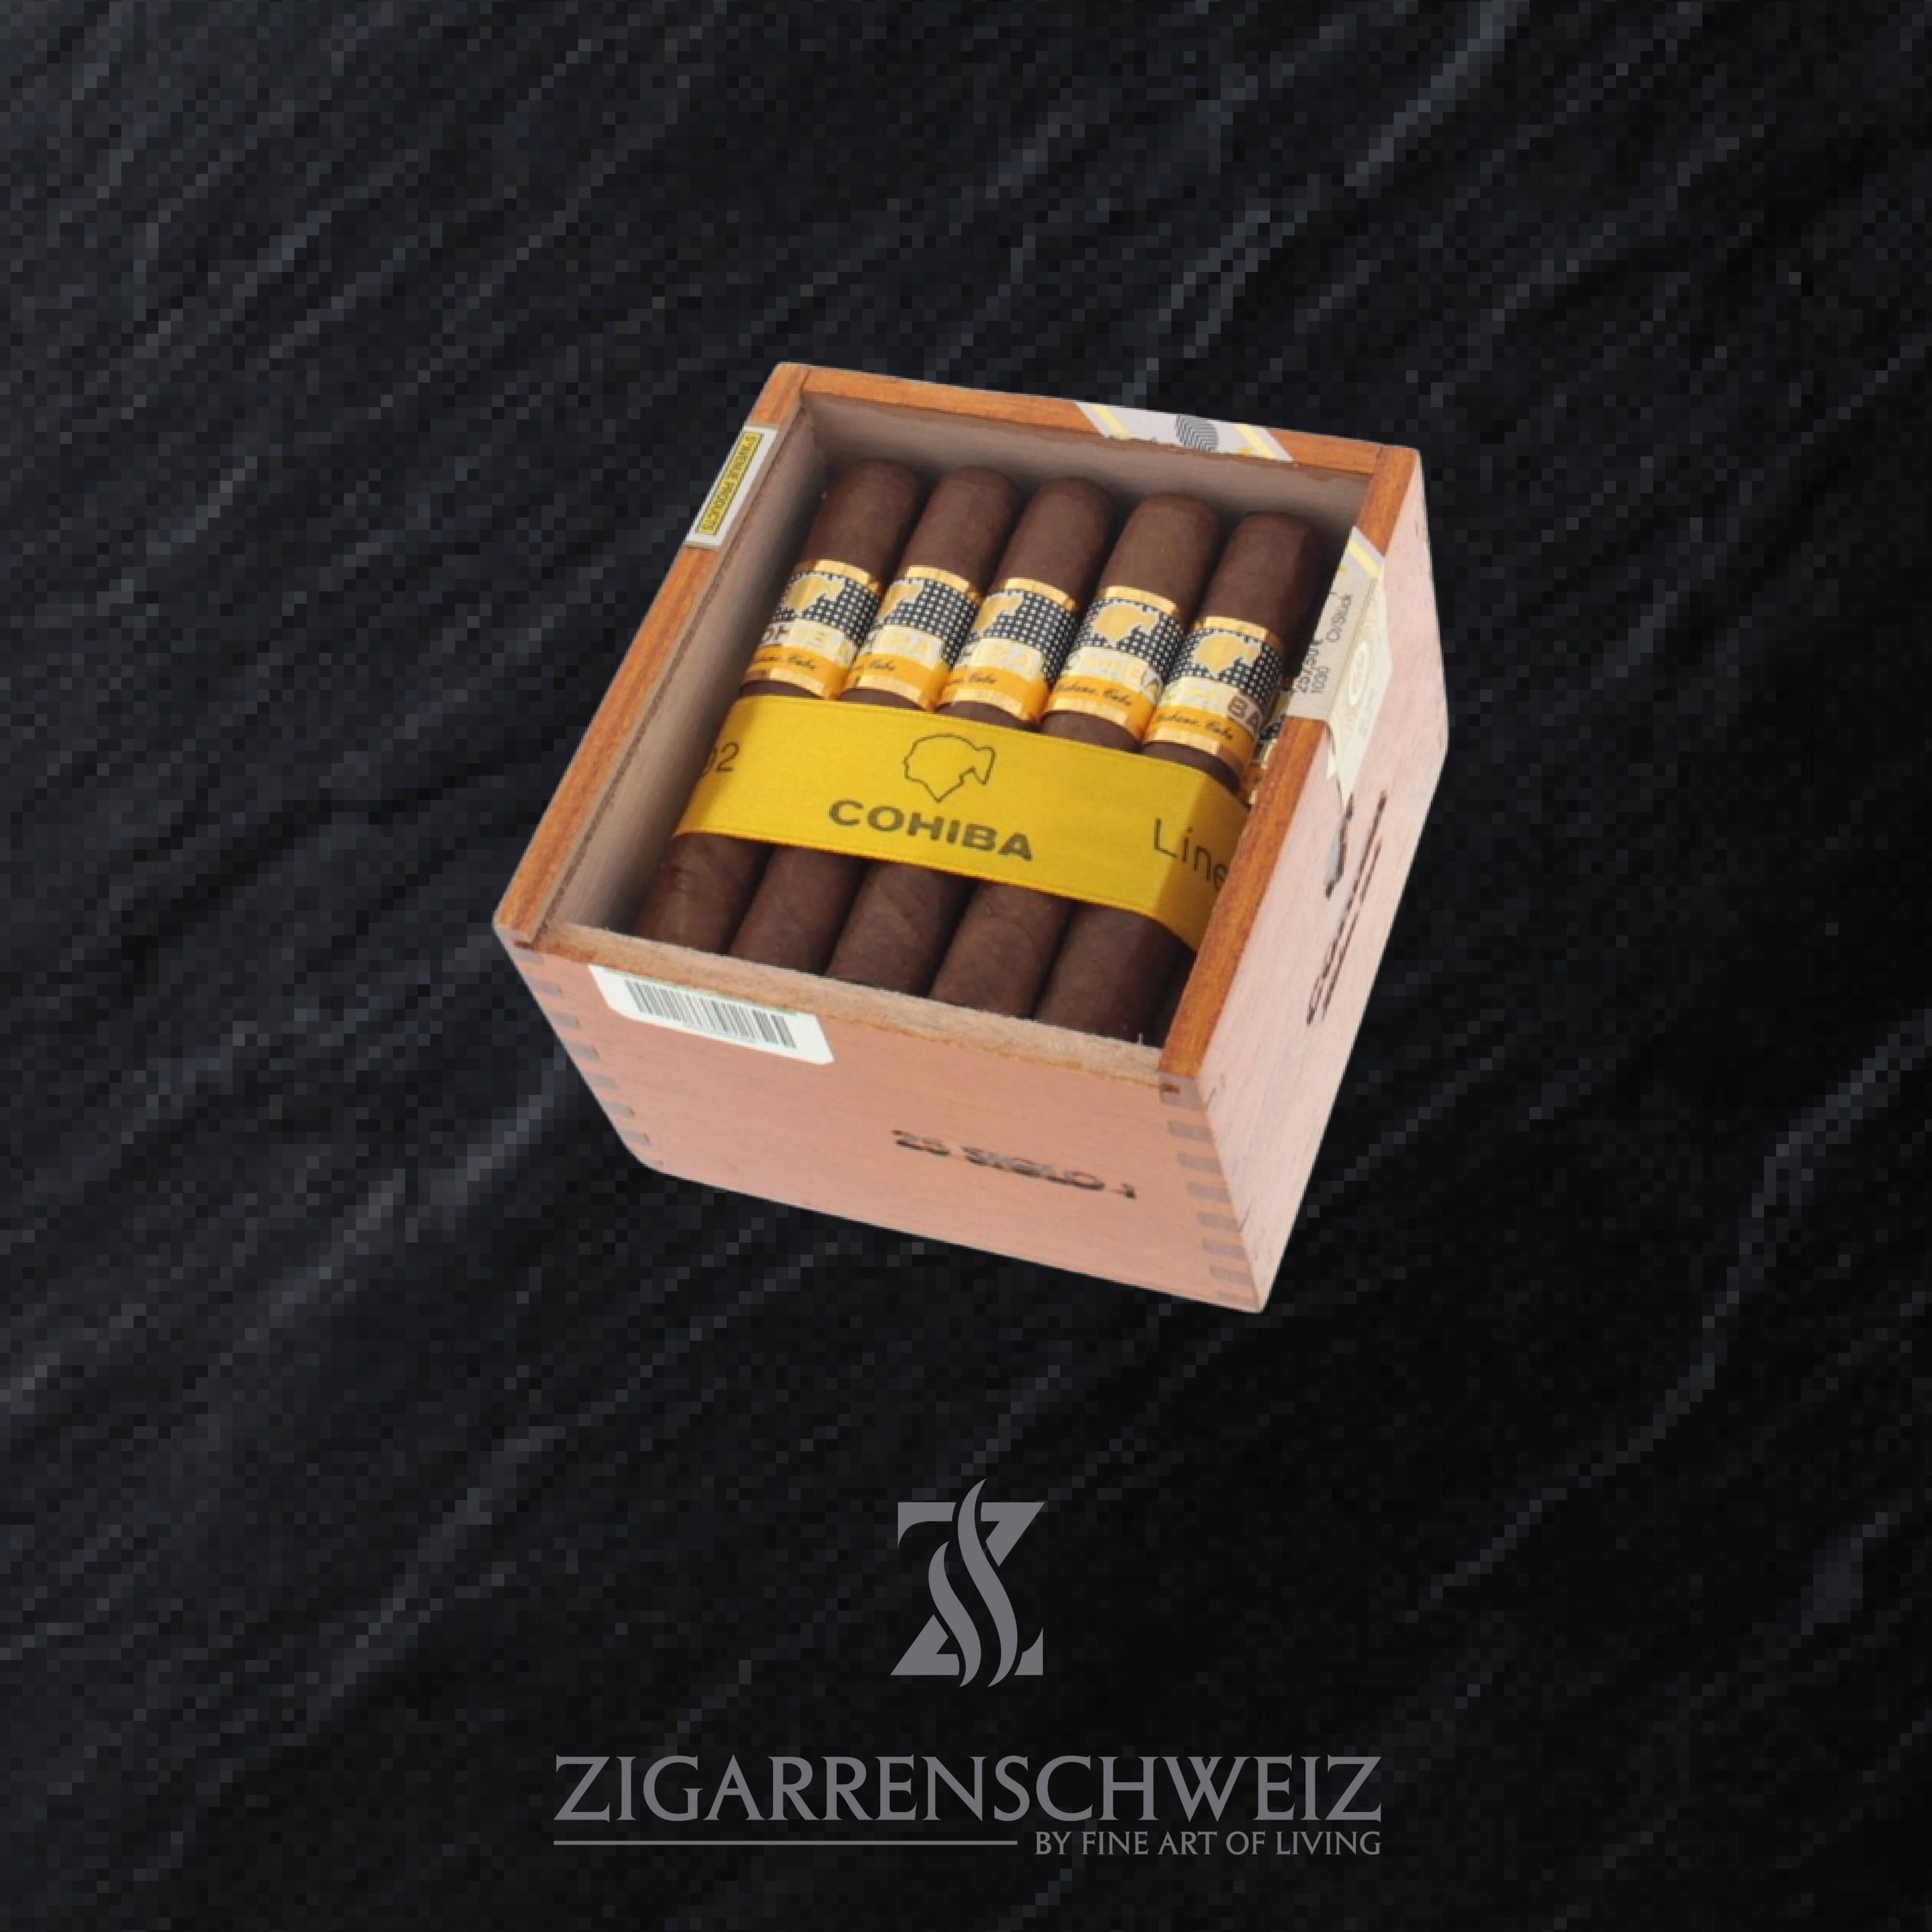 Cohiba Siglo I (1) Zigarre aus der Linea 1492 von Cohiba - 25er Kiste offen